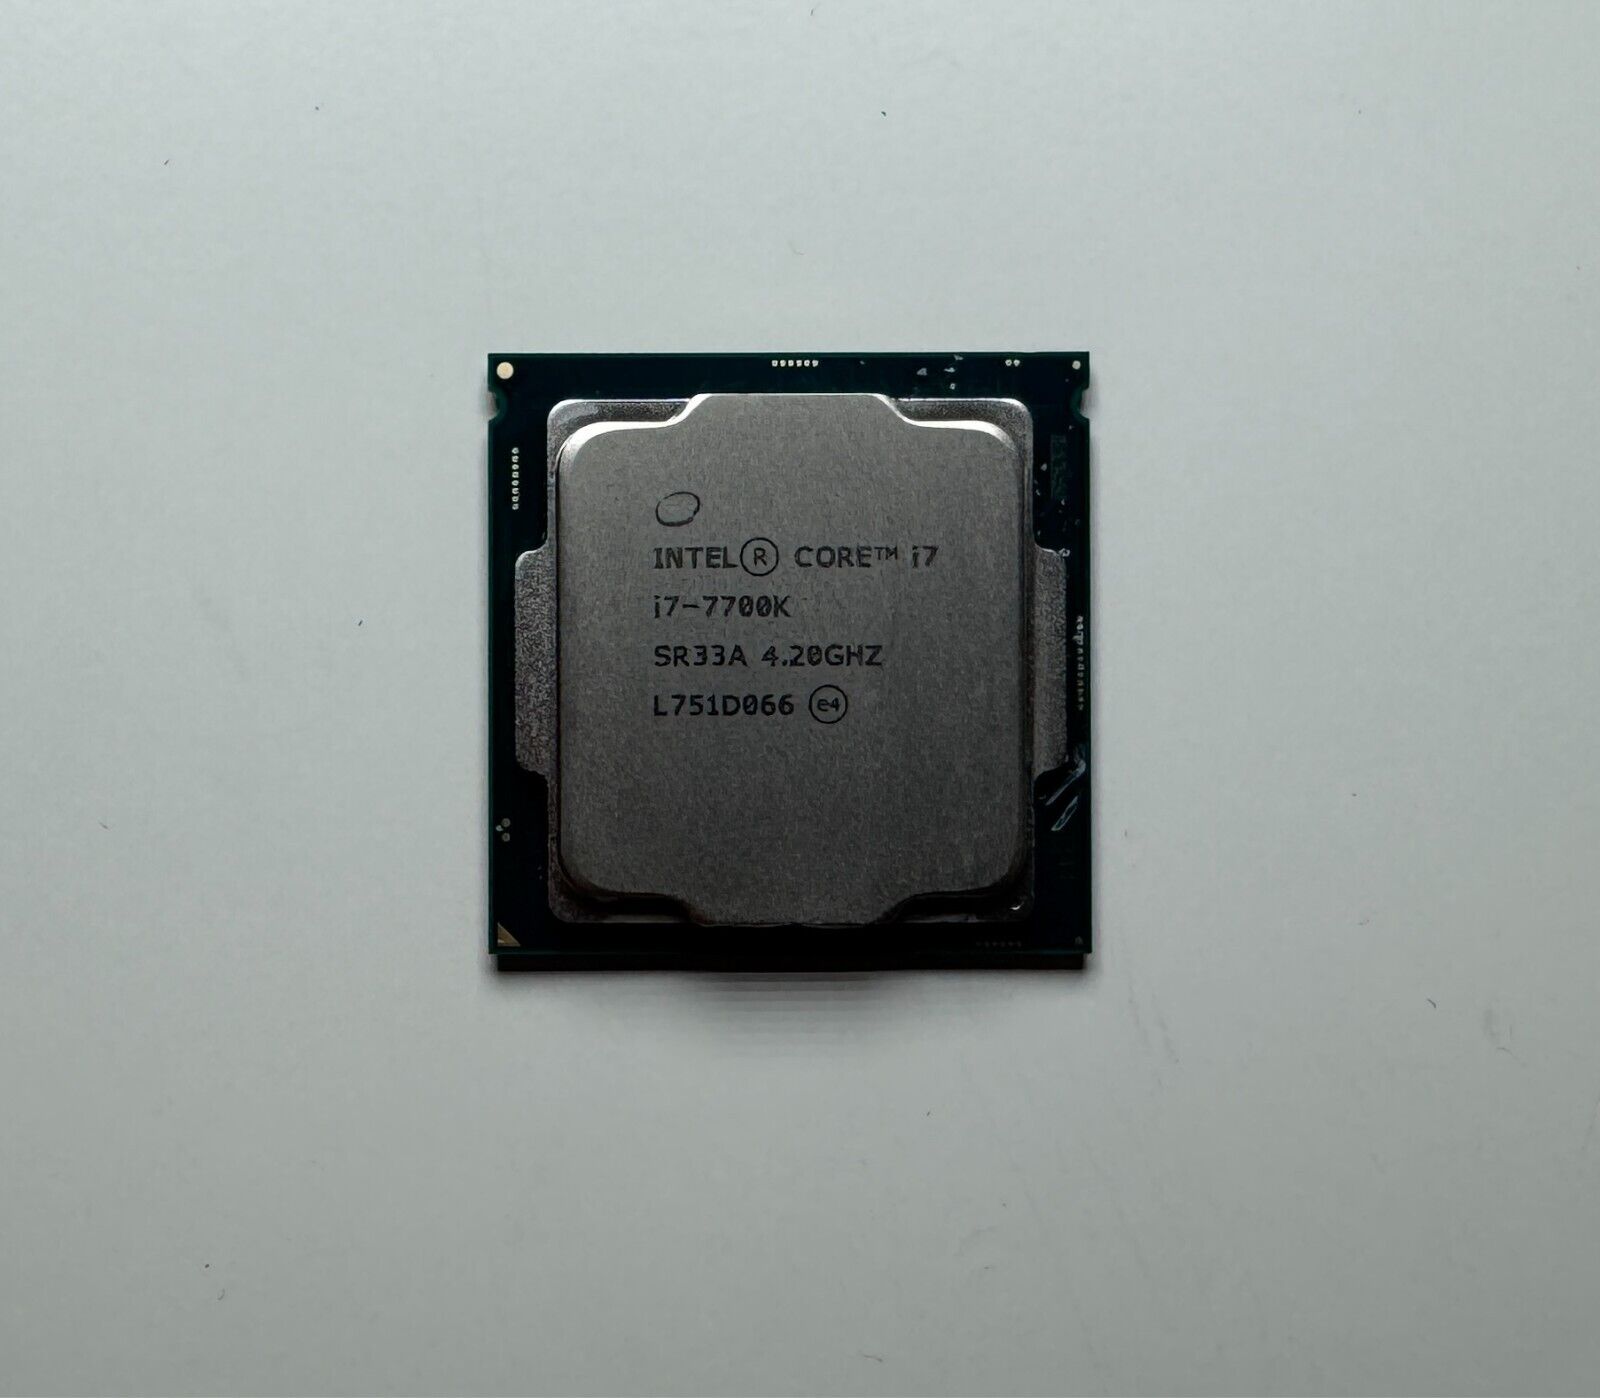 7th Gen Intel Core i7-7700K CPU 4.2 GHz (Turbo 4.5 GHz) 4-Core 8M LGA-1151 SR33A